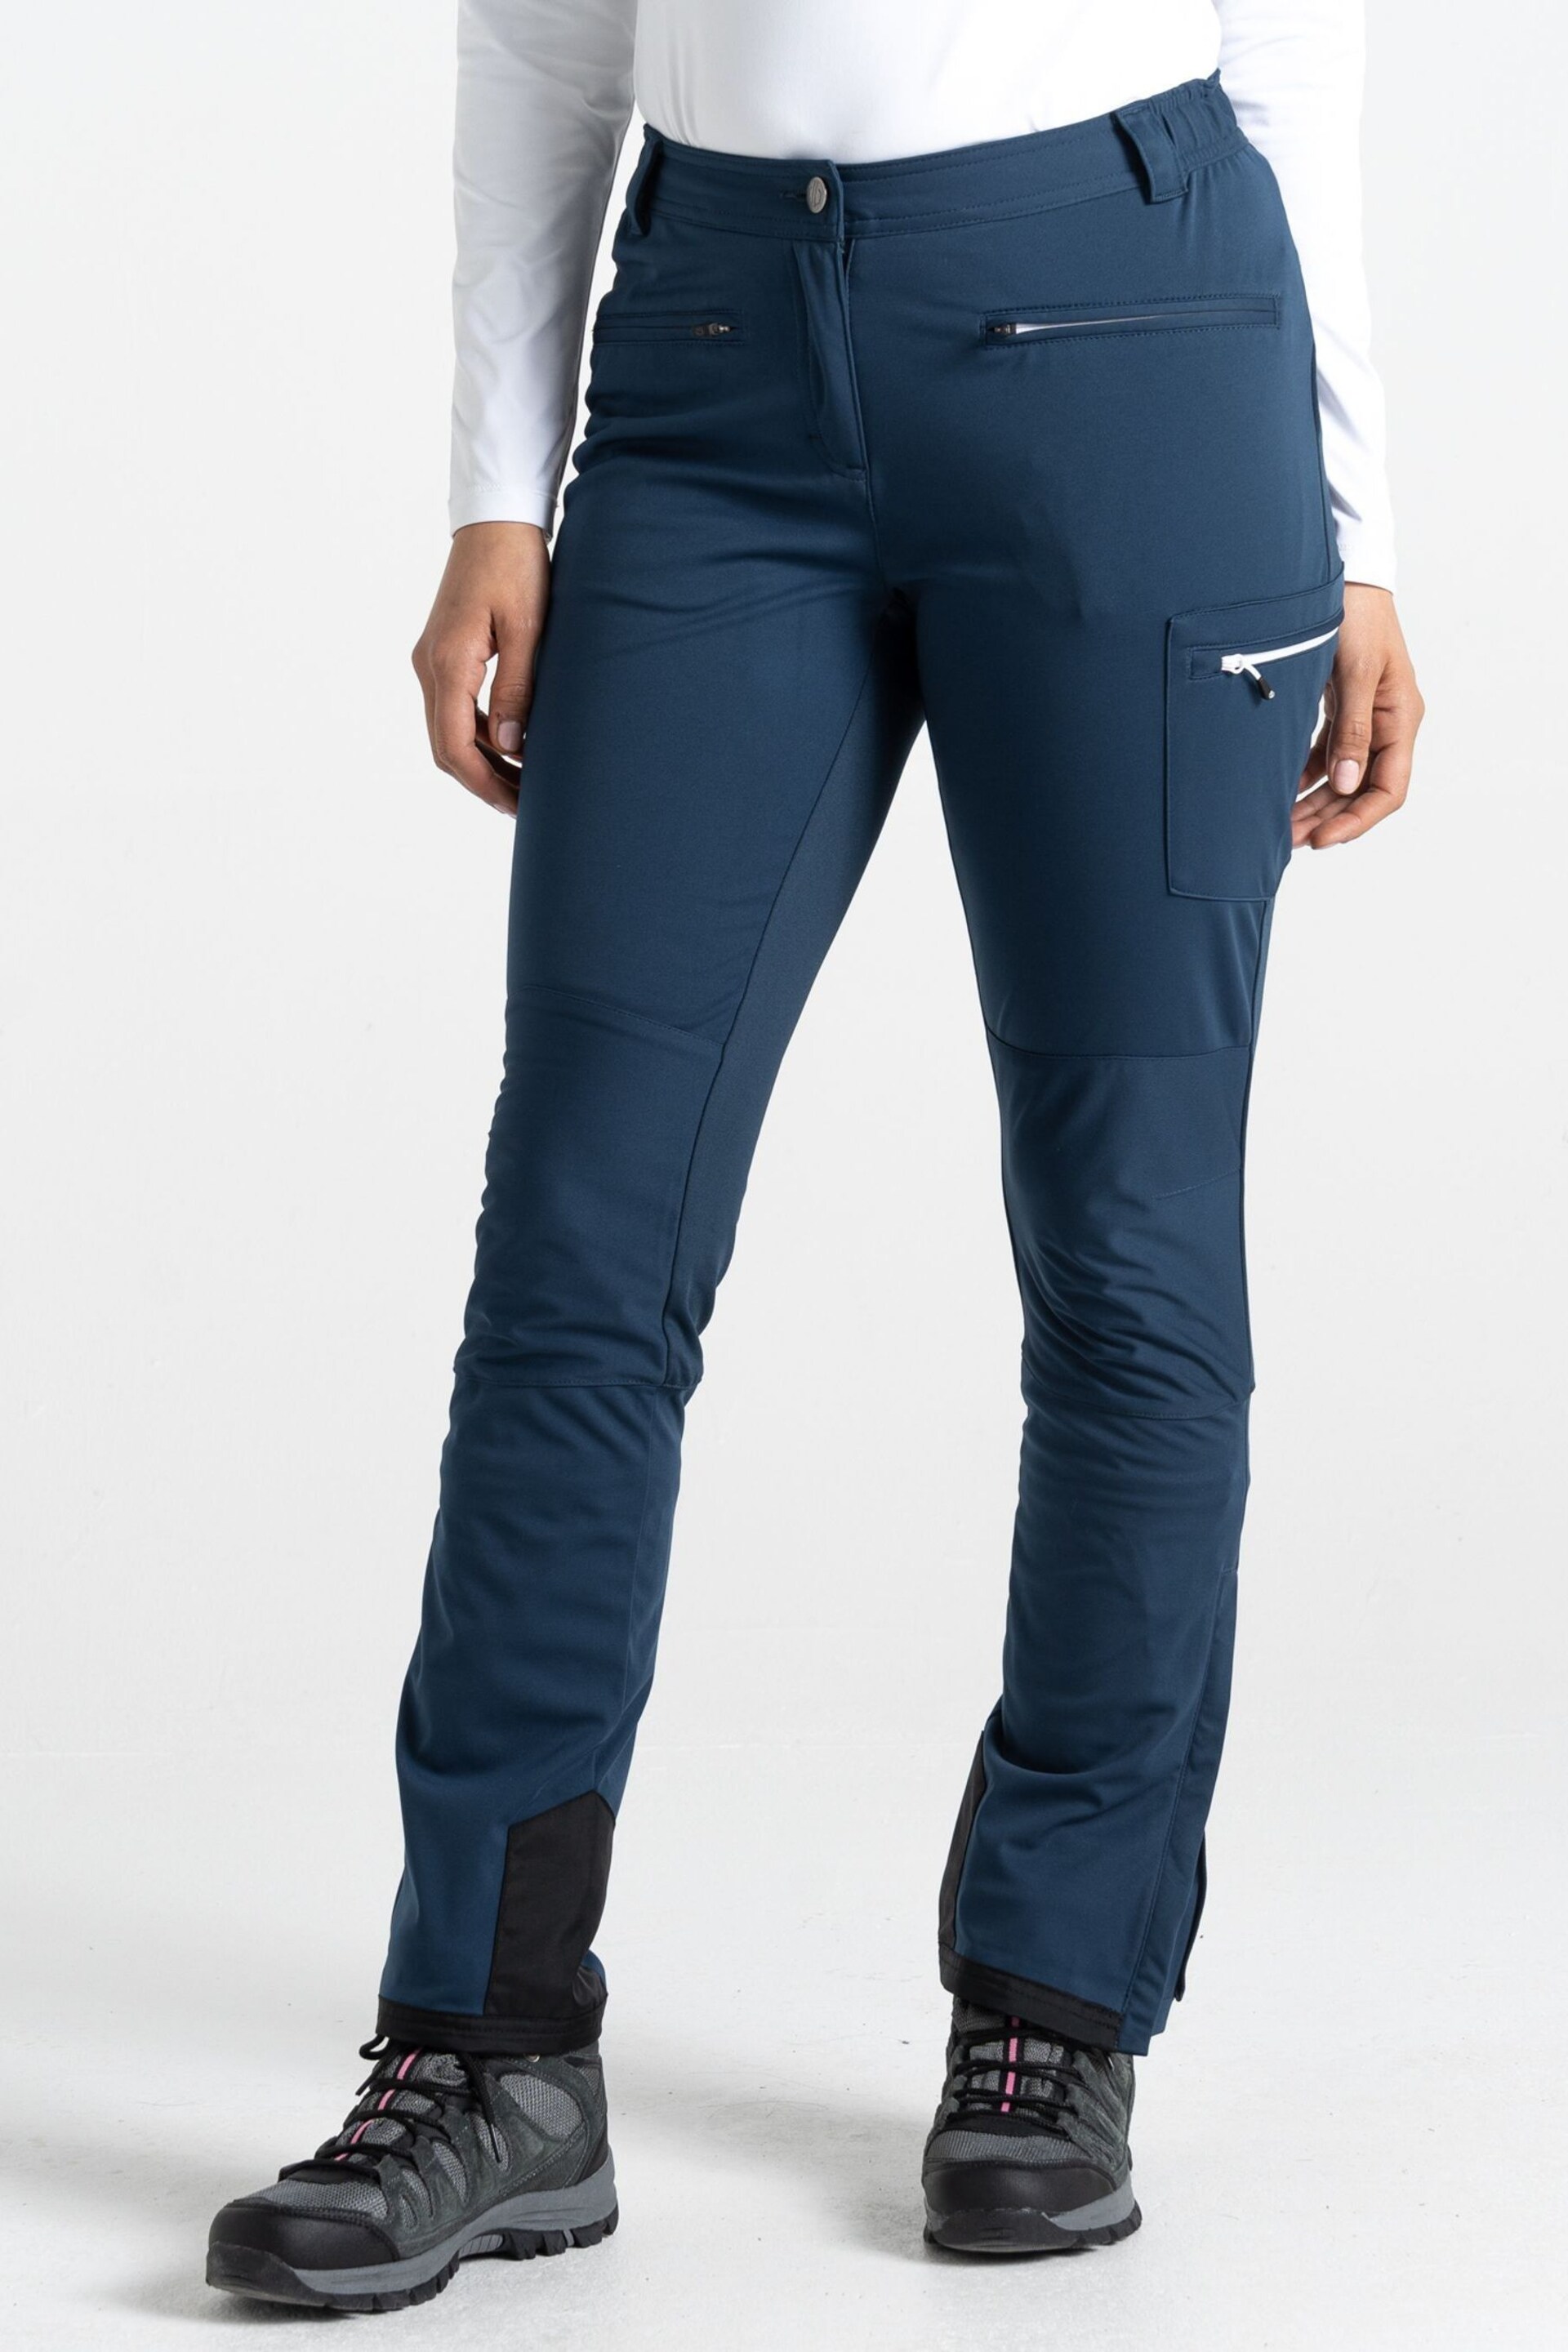 Dare 2b Blue Women's Appended II Waterproof Trousers - Image 3 of 6